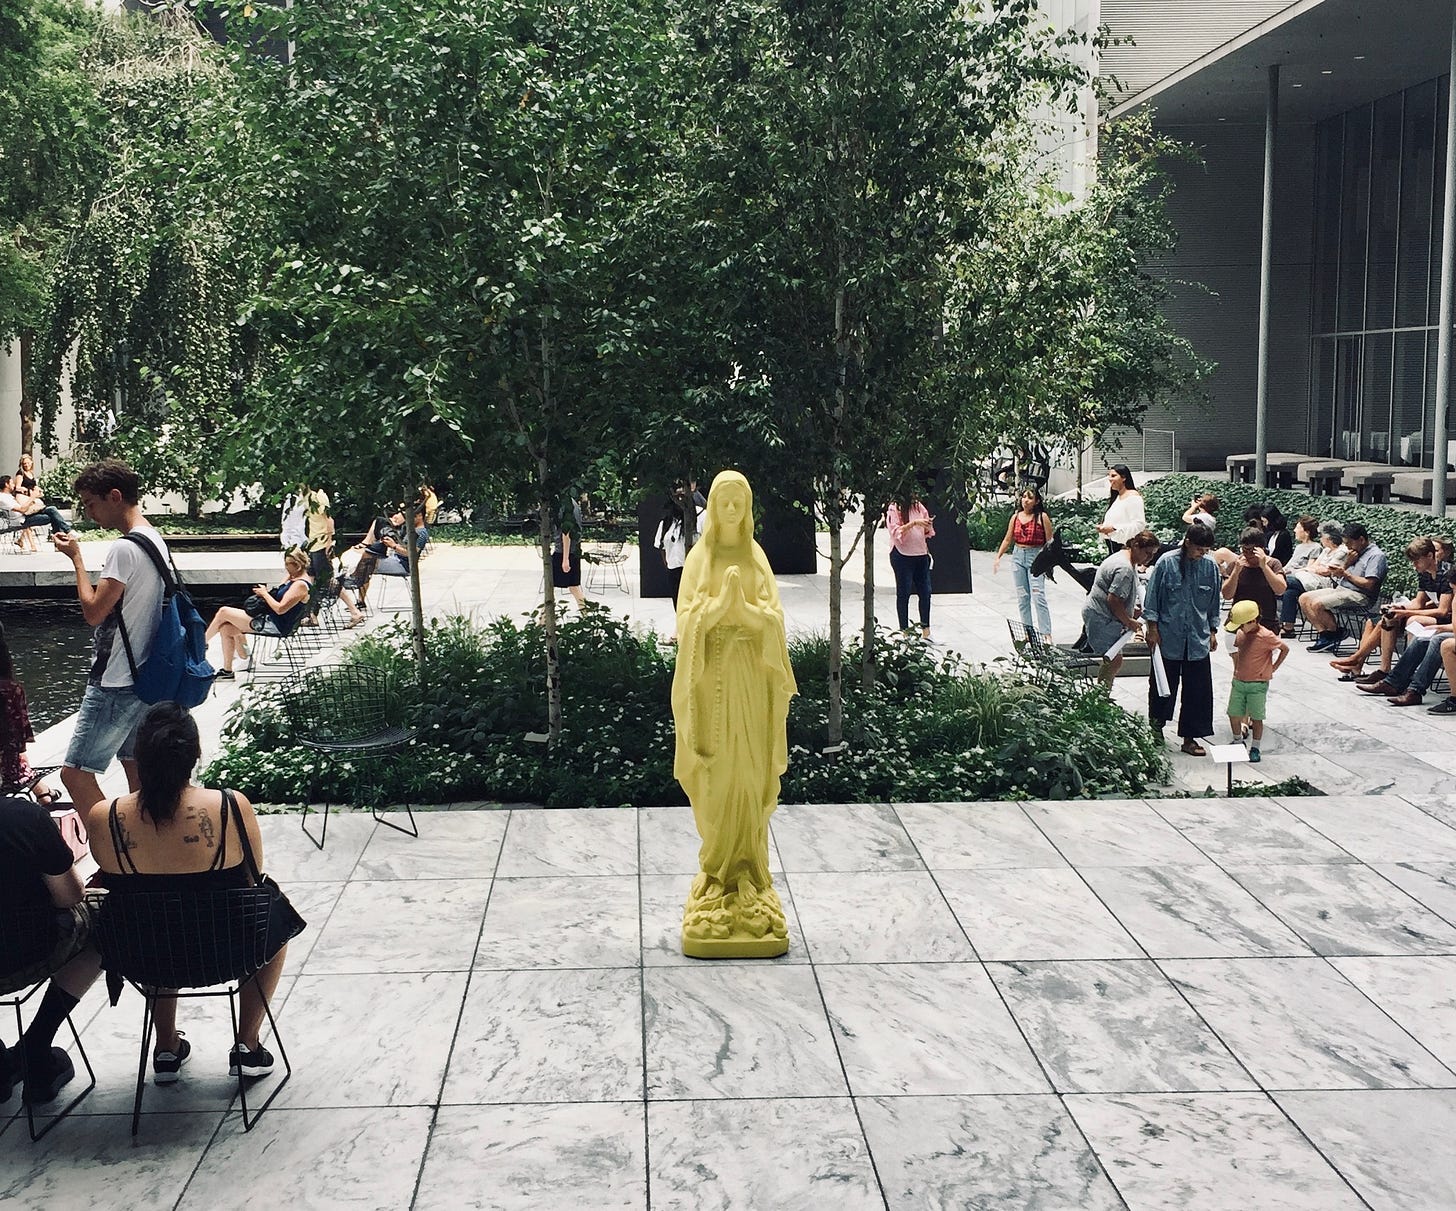 A bright yellow Madonna statue